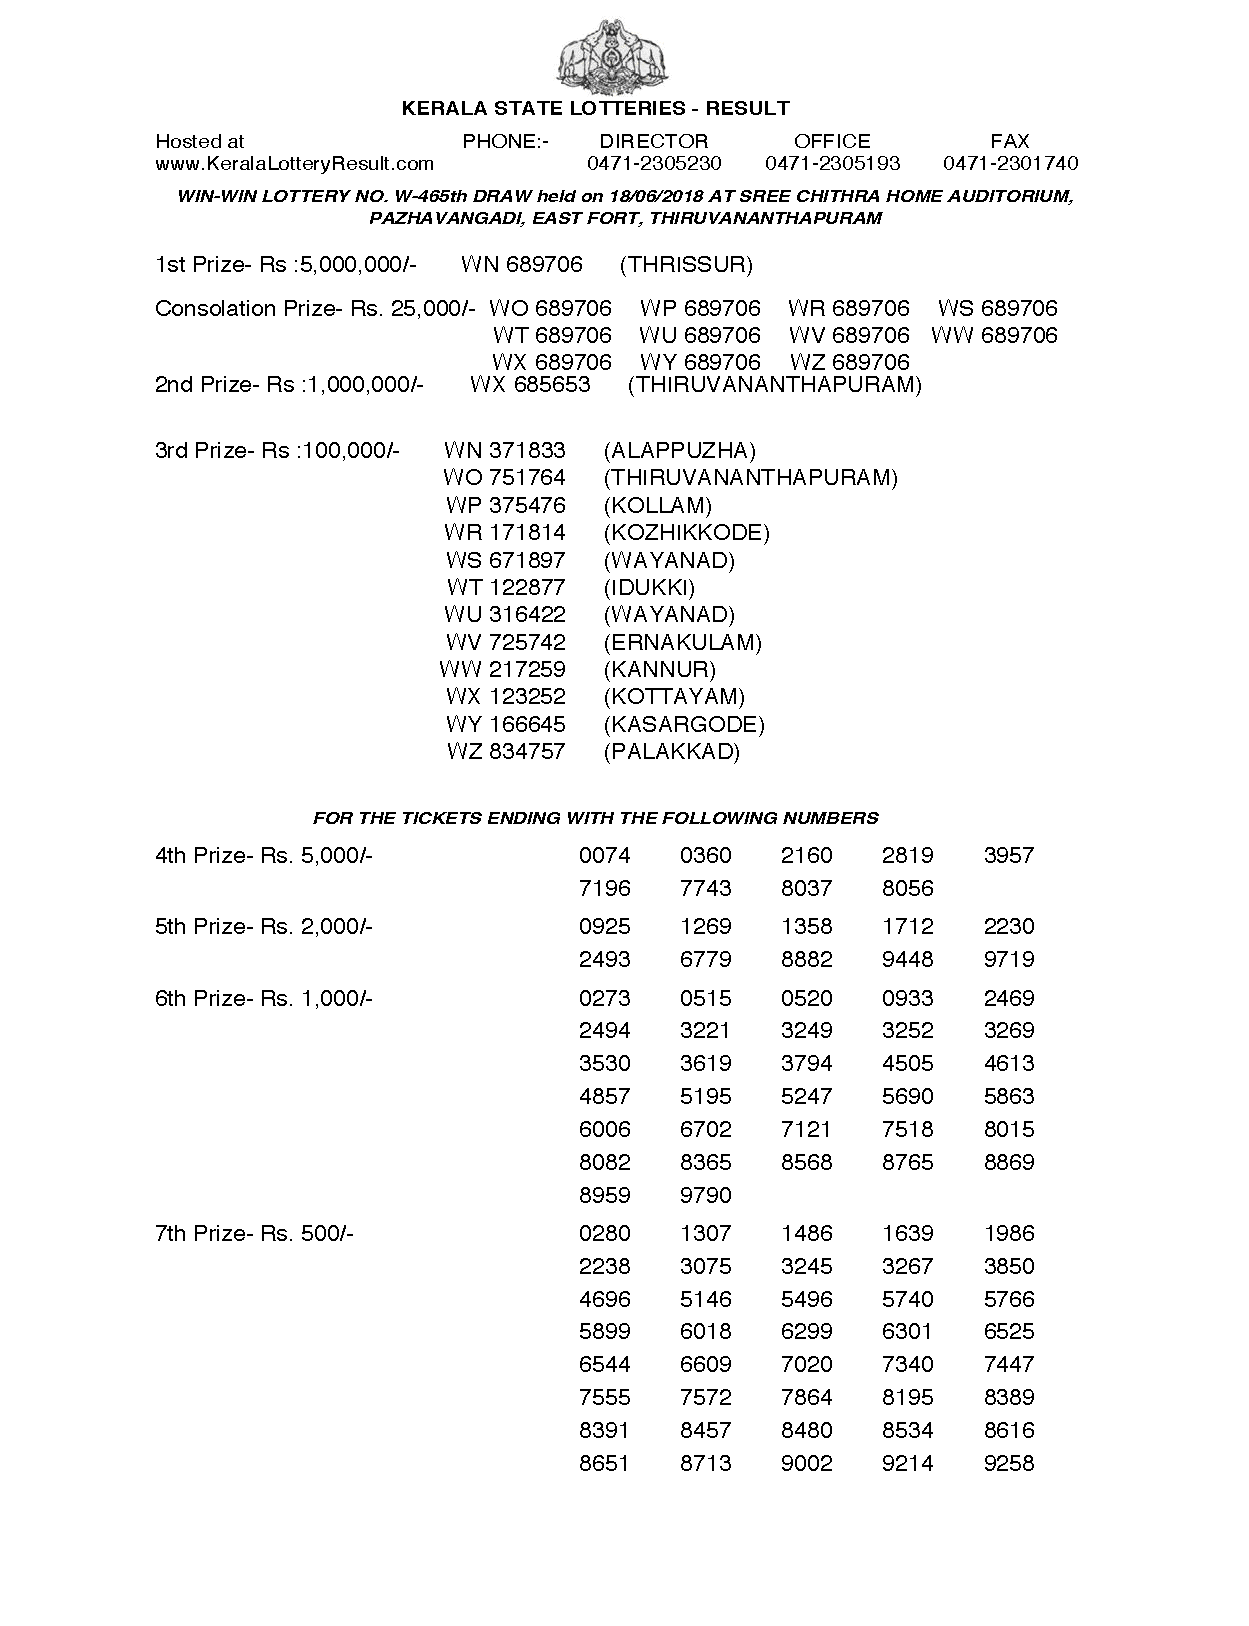 Winwin W465 Kerala Lottery Results Screenshot: Page 1